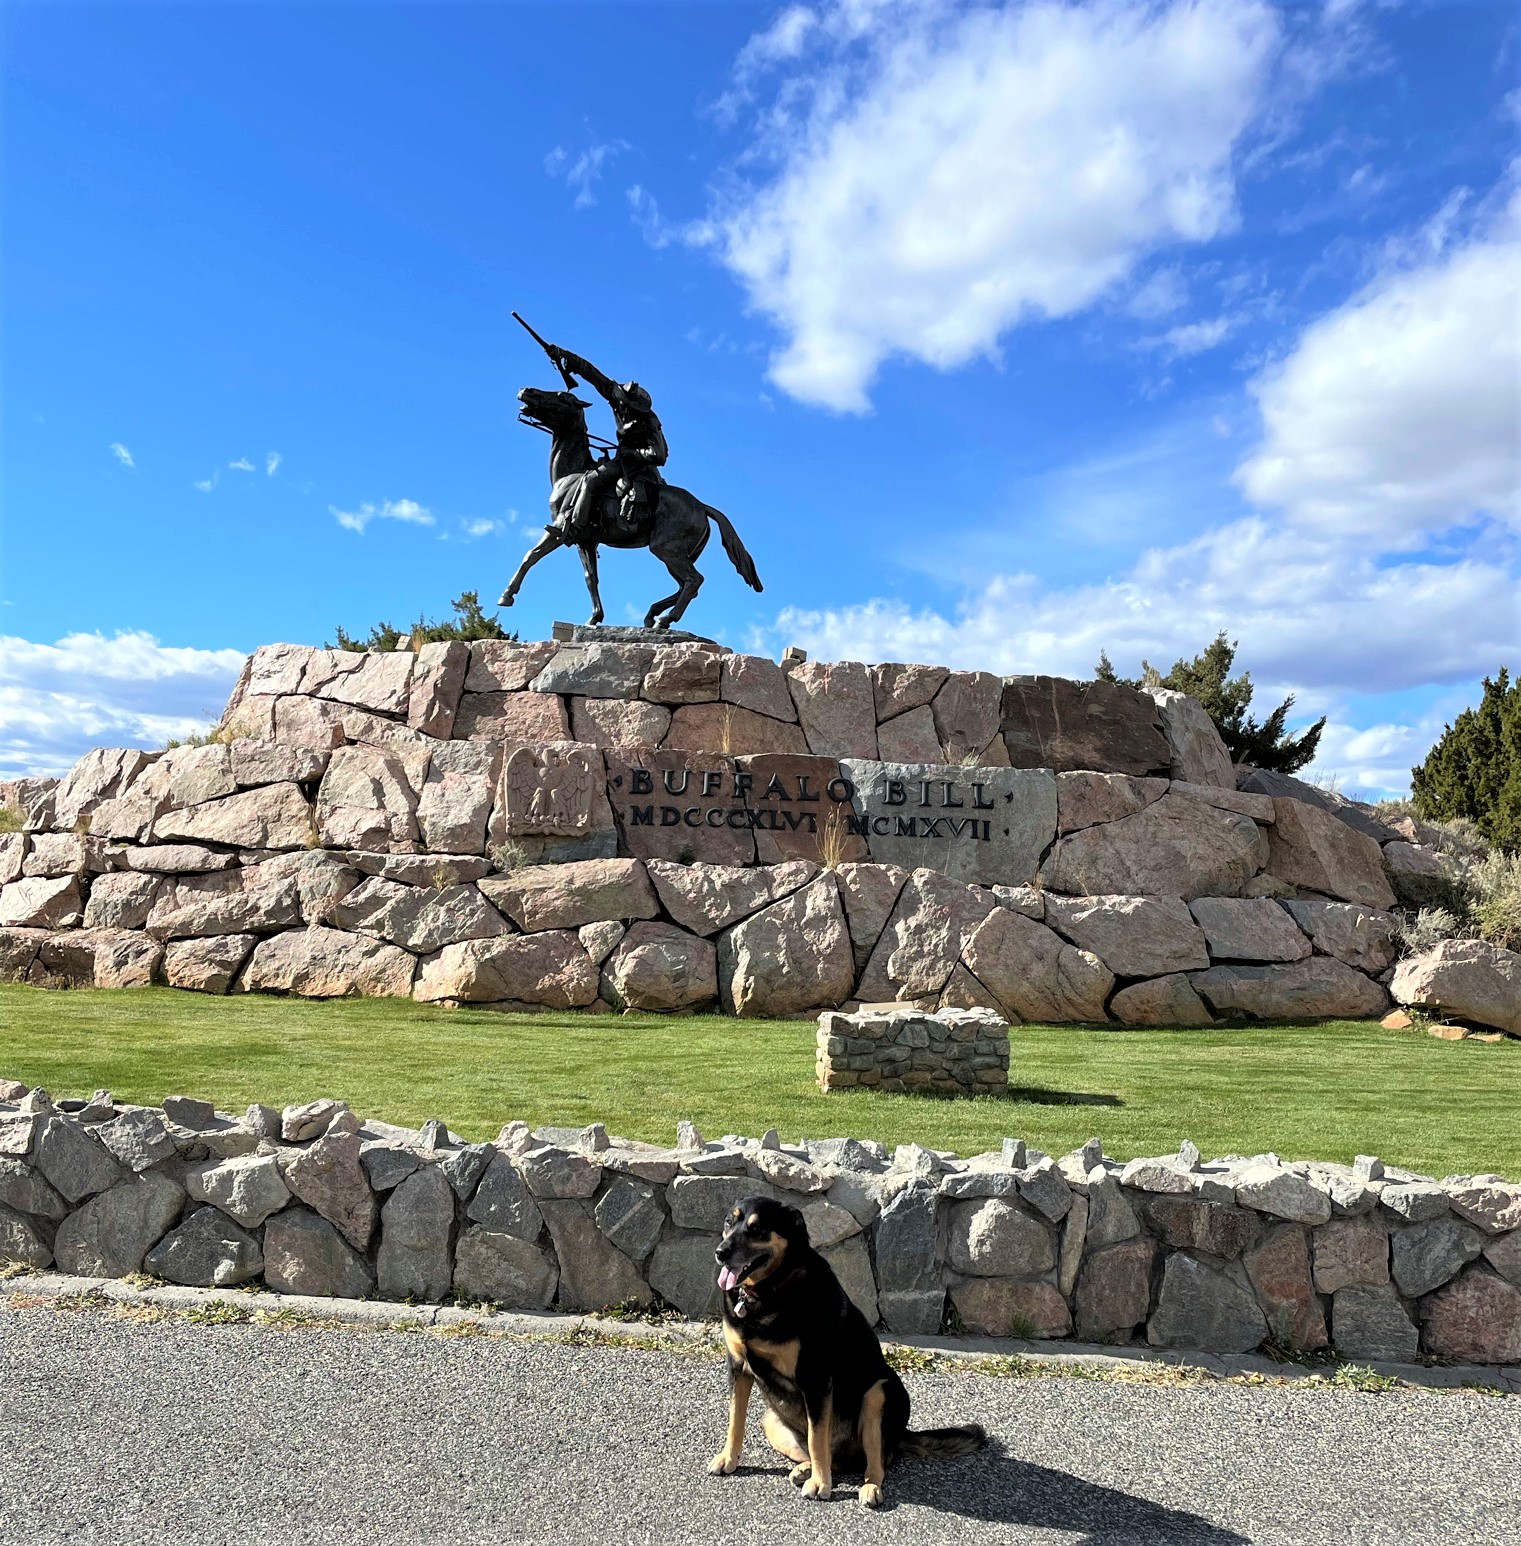 Buffalo Bill Museum in Cody, Wyoming